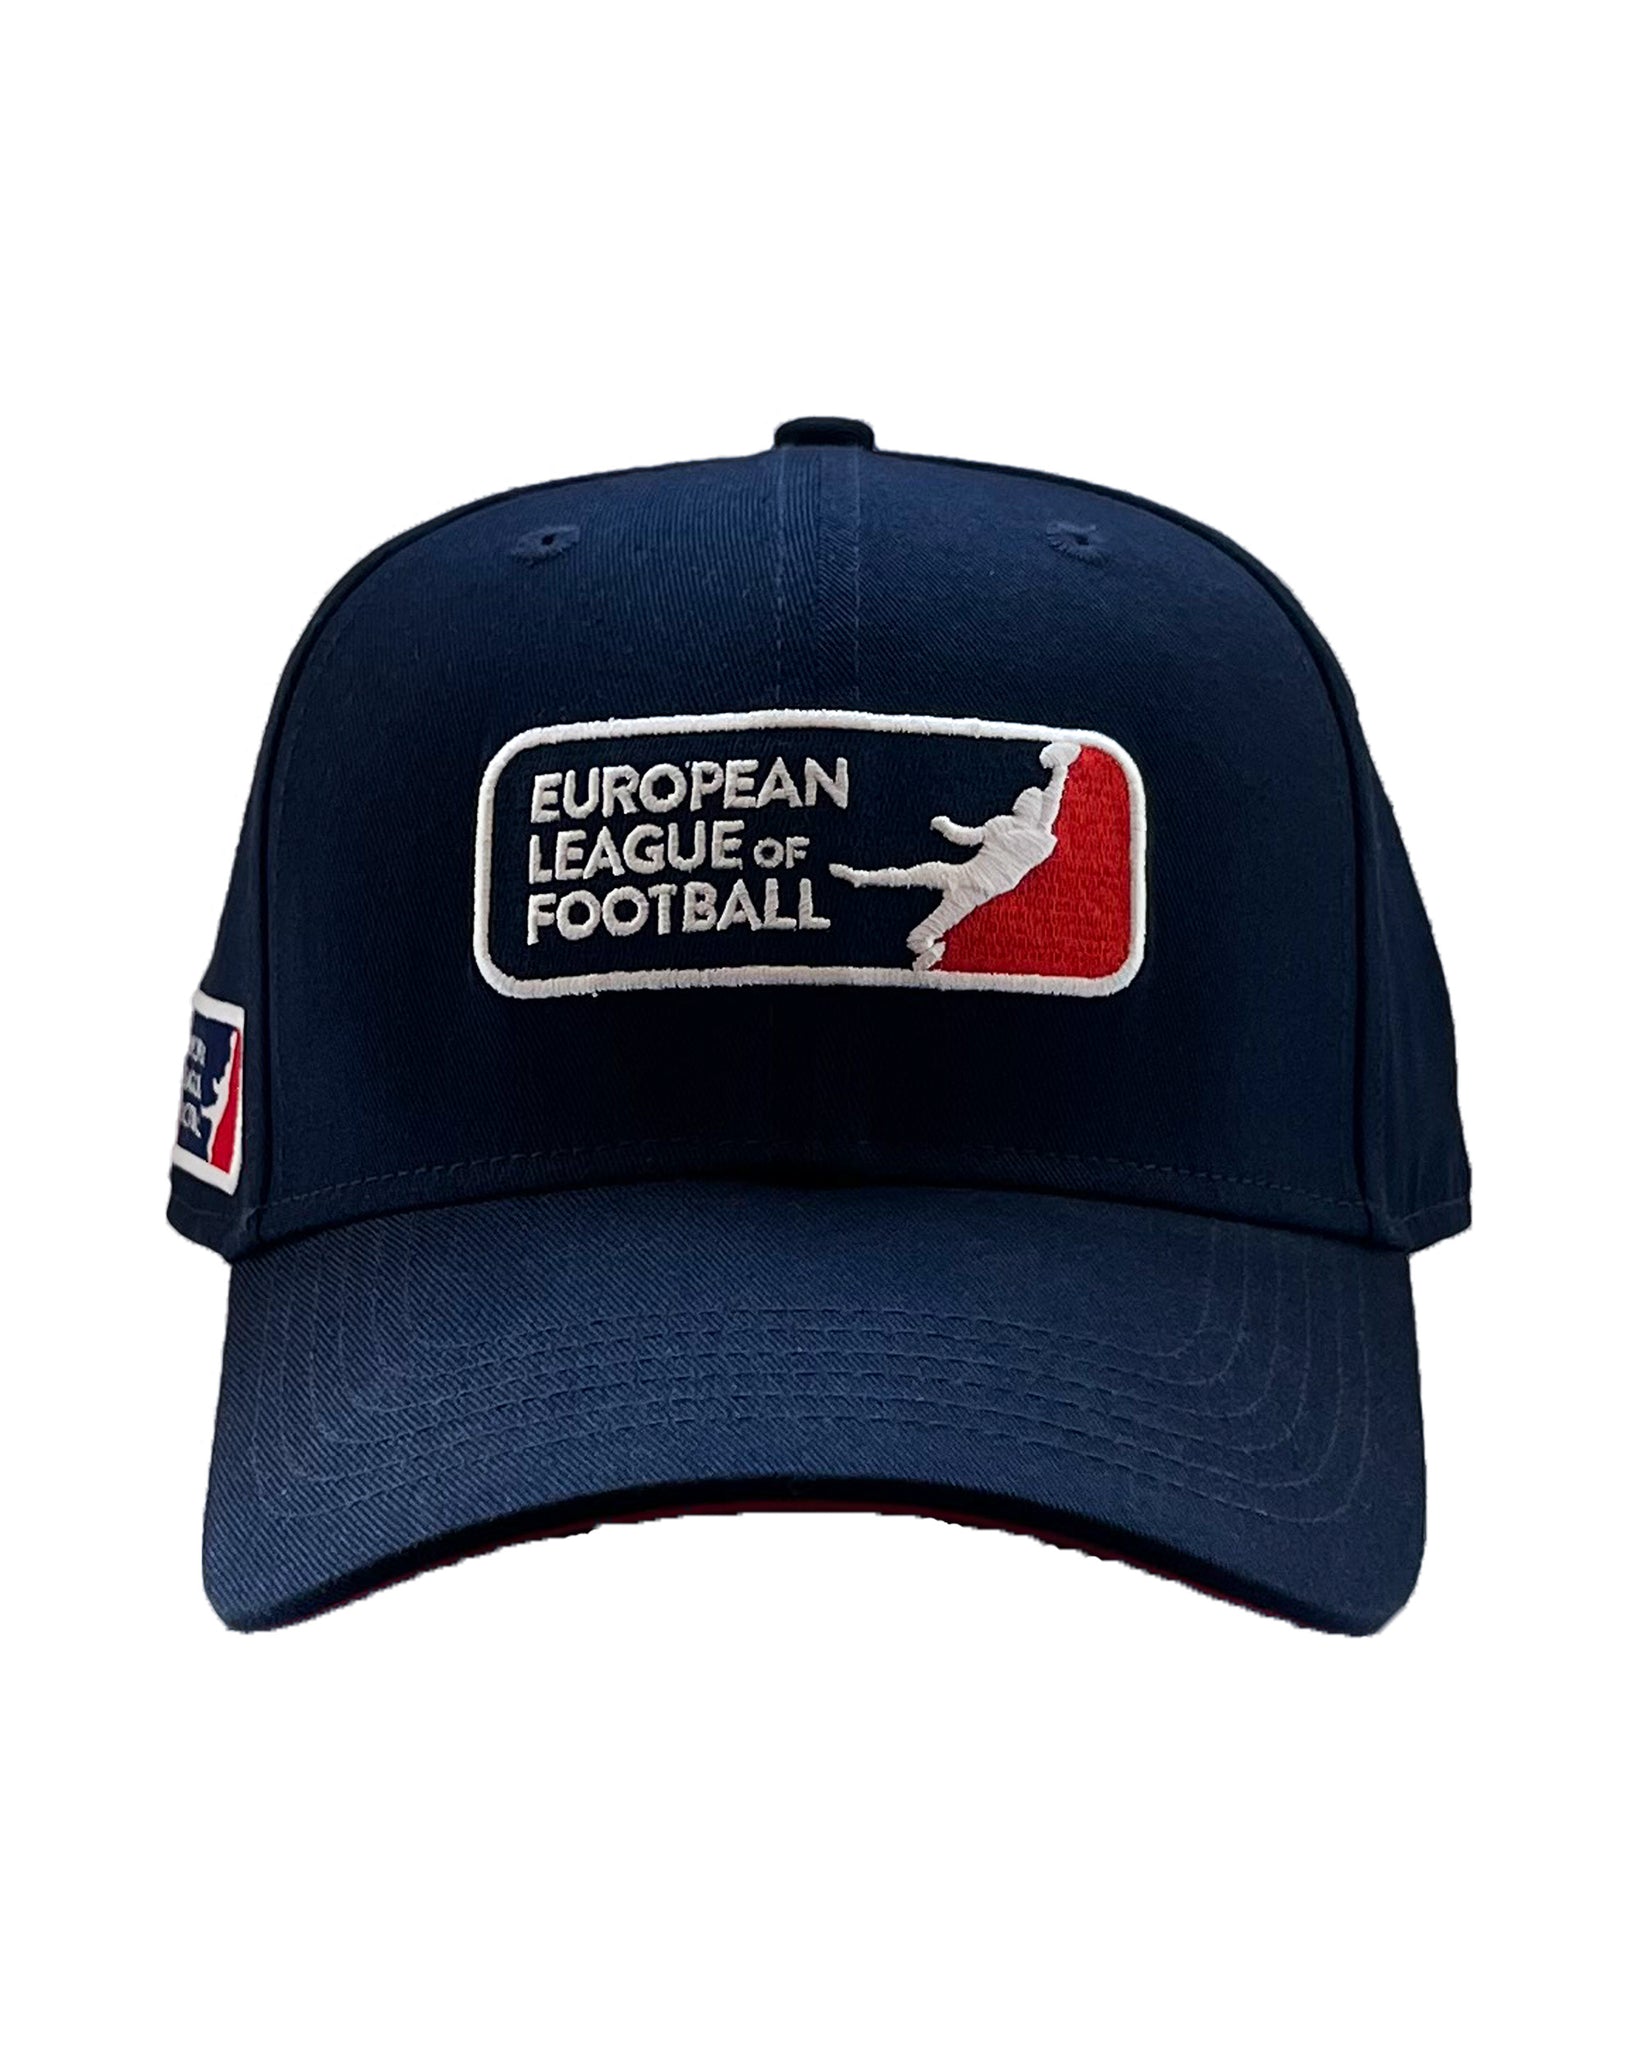 European League of Football Basecap